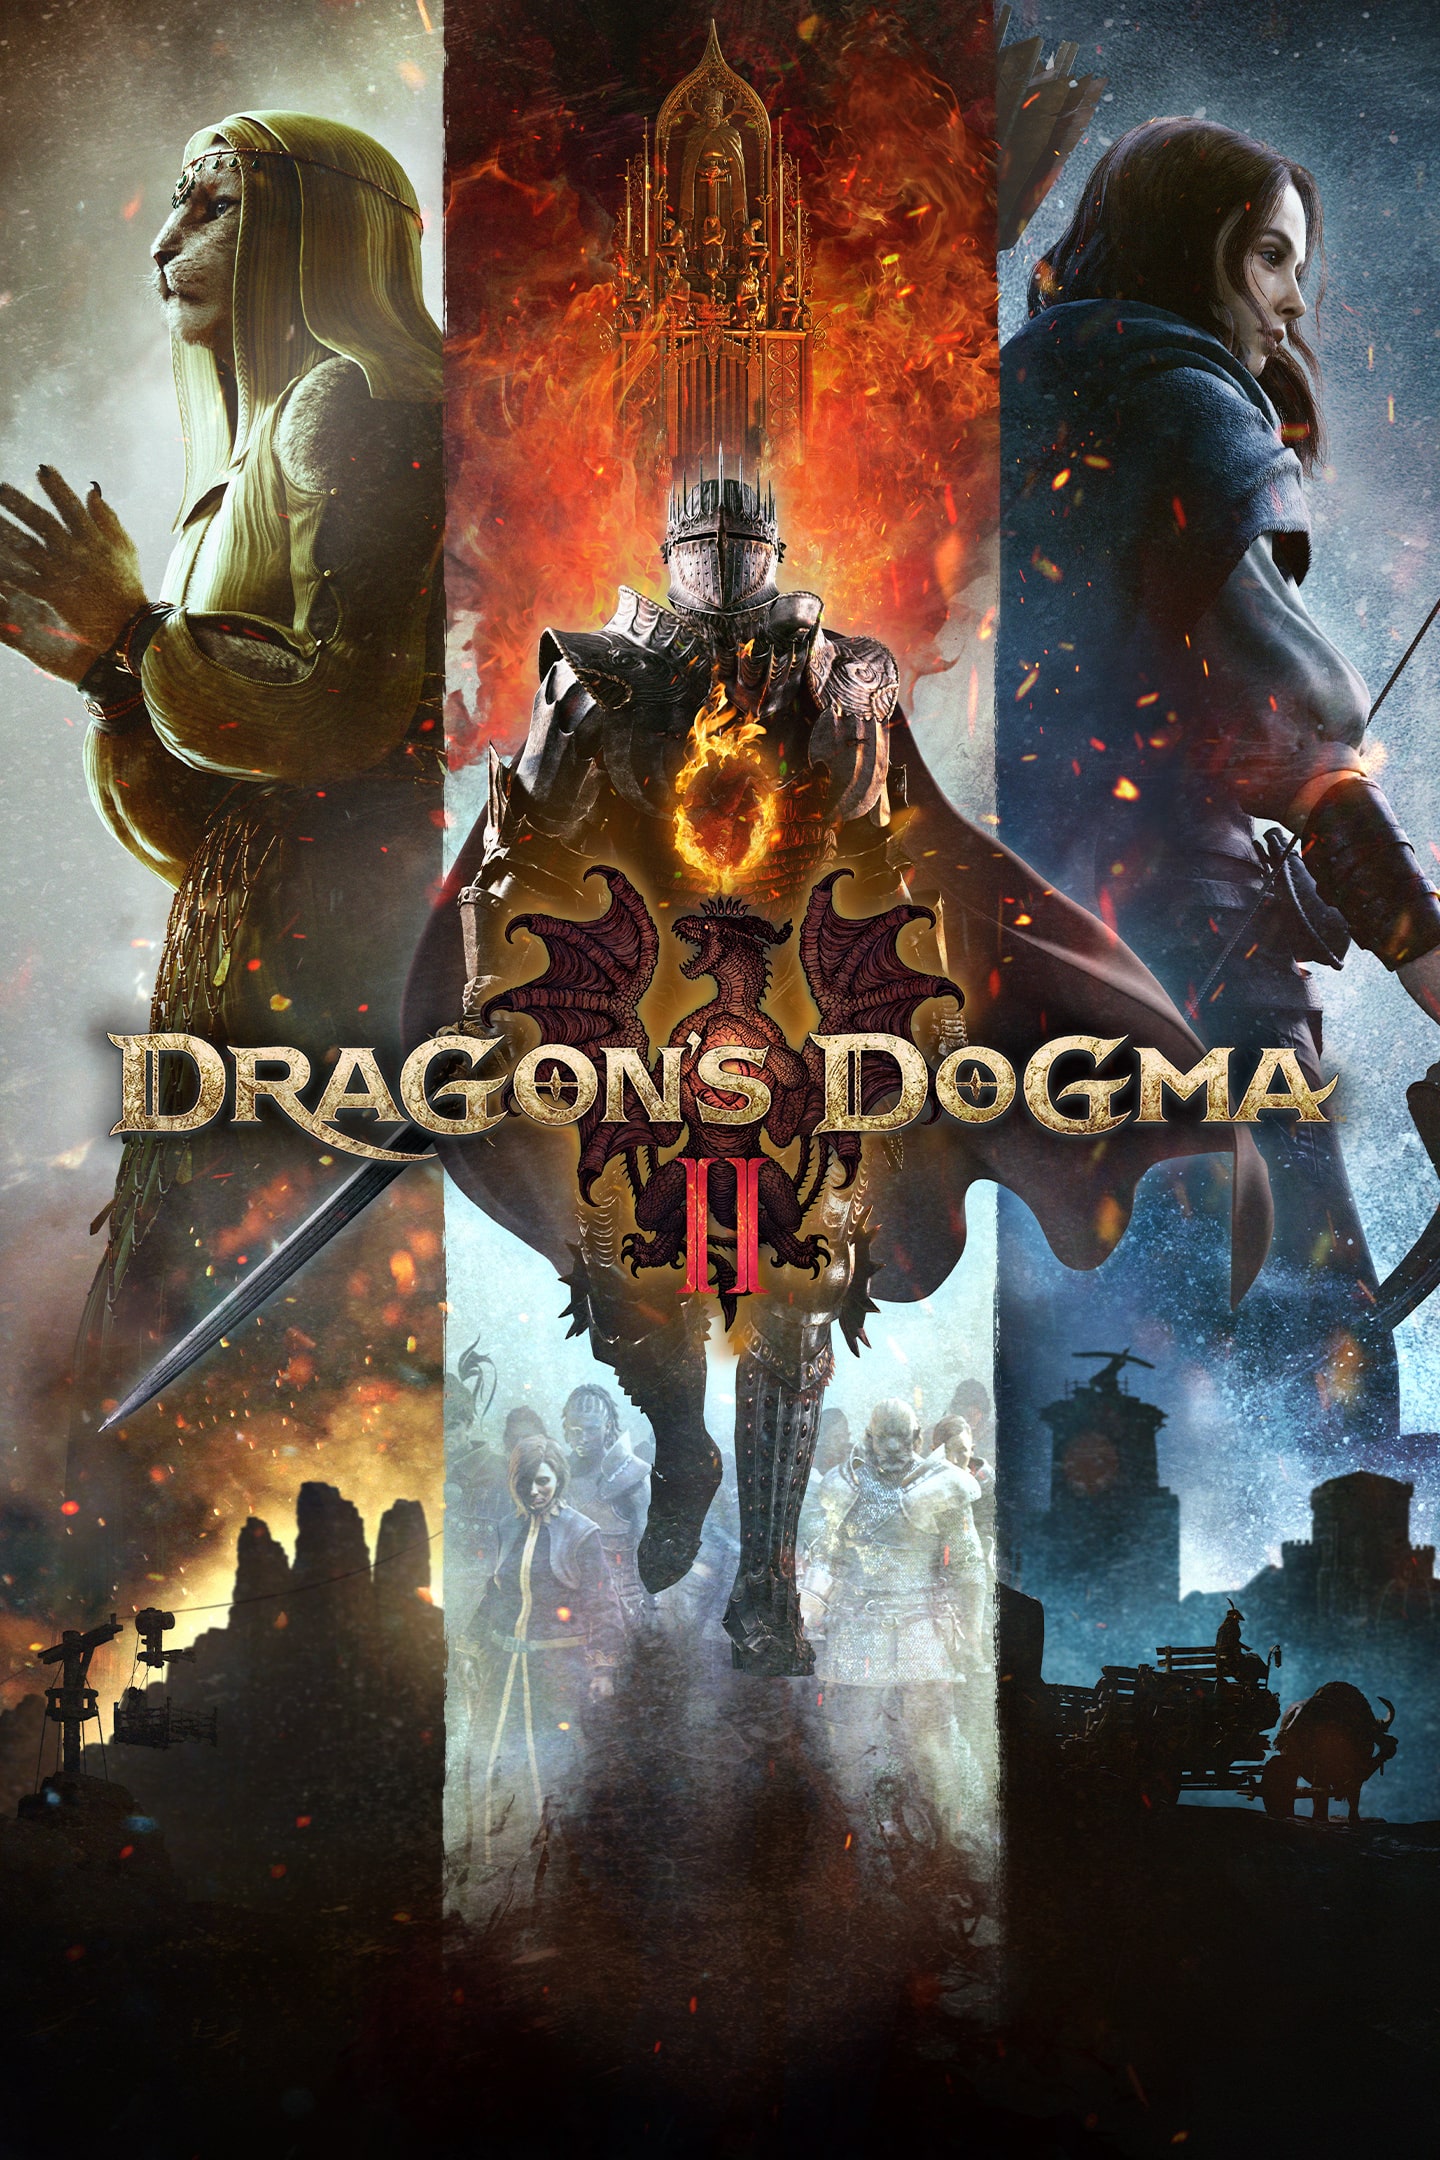 Dragons Dogma 2 Steelbook Edition (PS5) - Game 4U